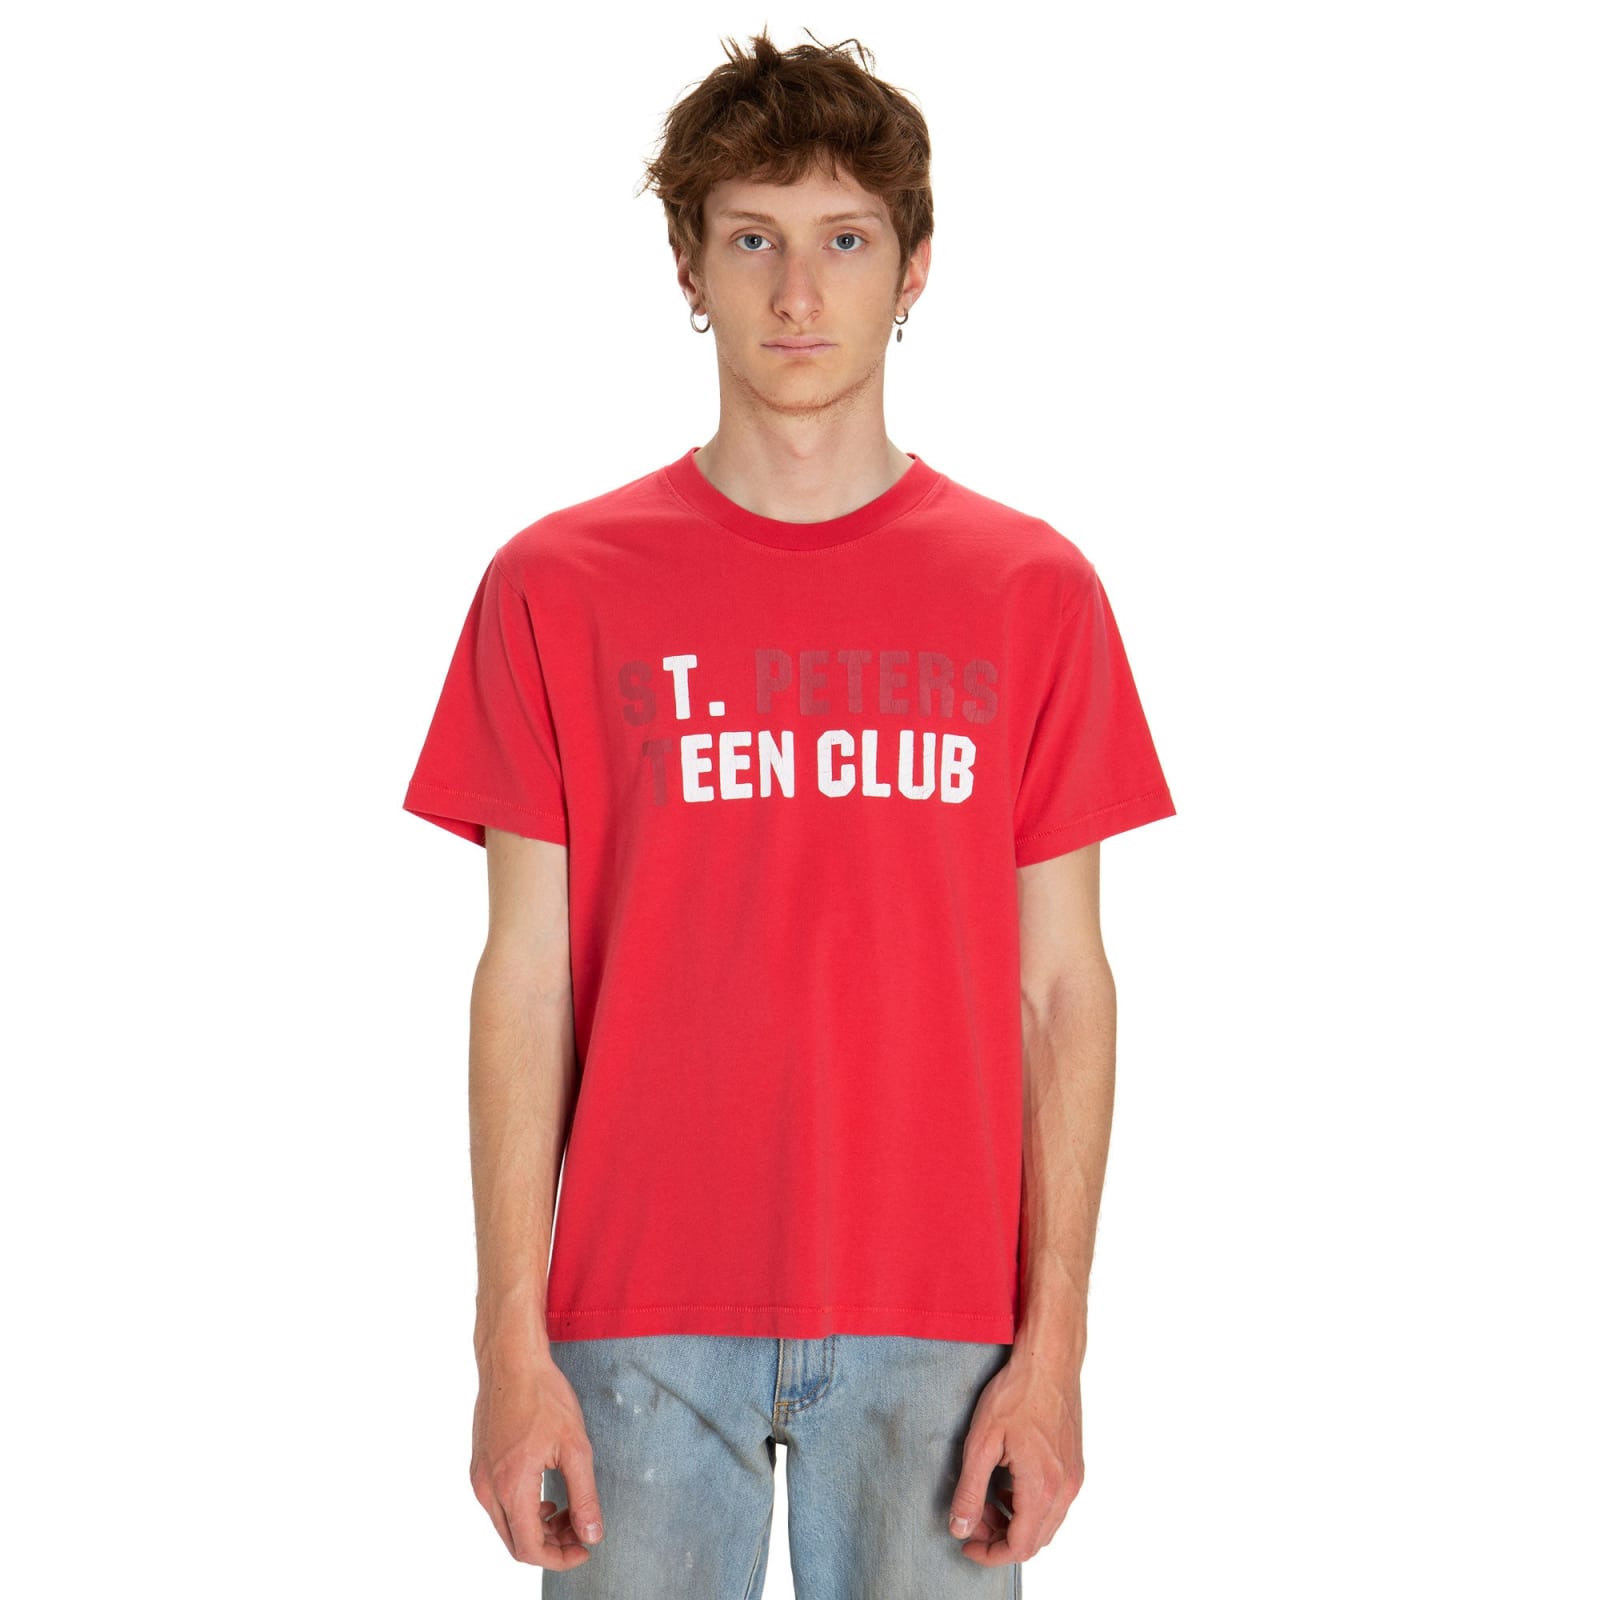 ERL Teen Club T-shirt